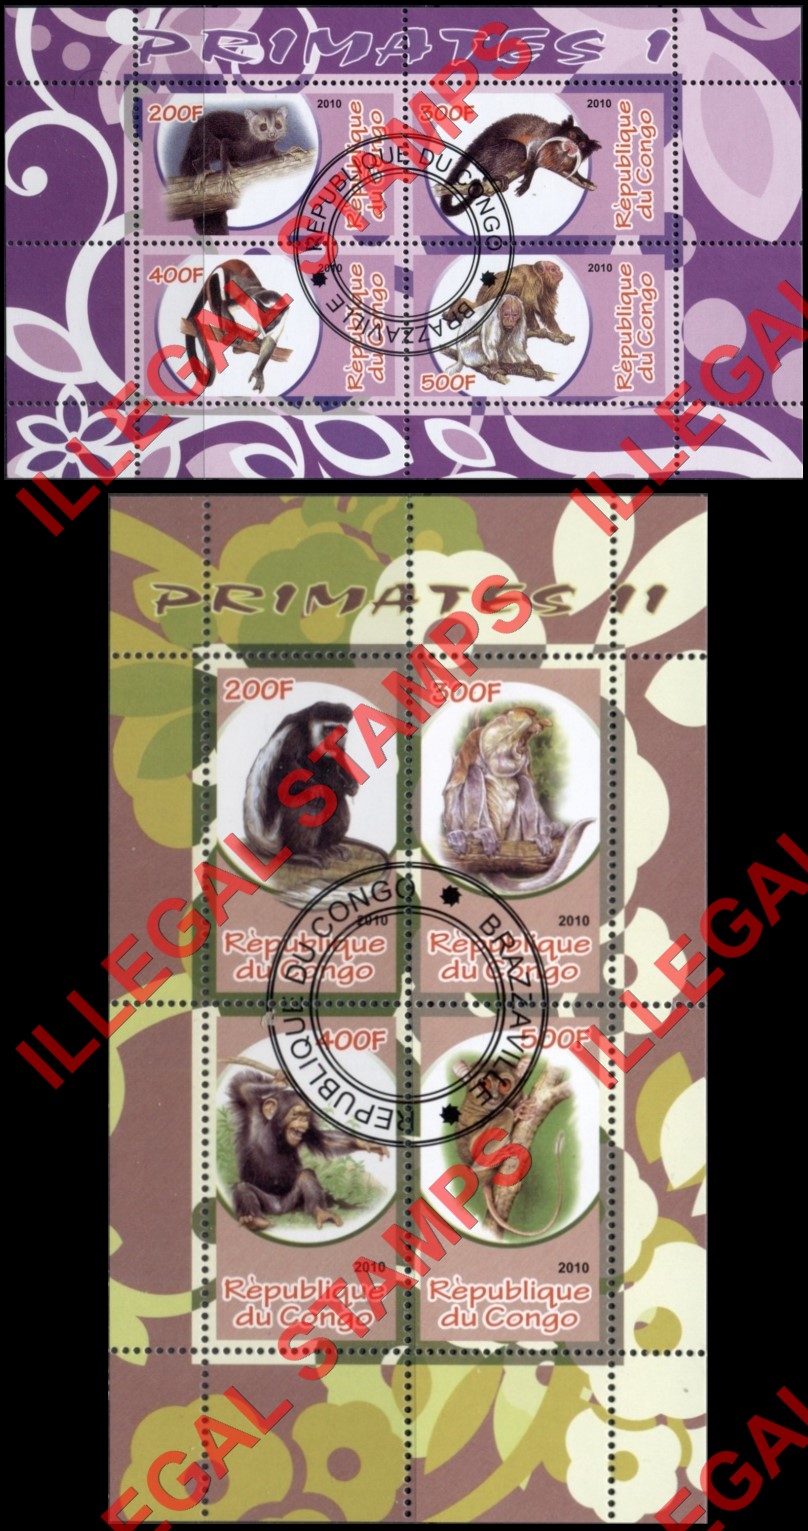 Congo Republic 2010 Primates Illegal Stamp Souvenir Sheets of 4 (Part 1)